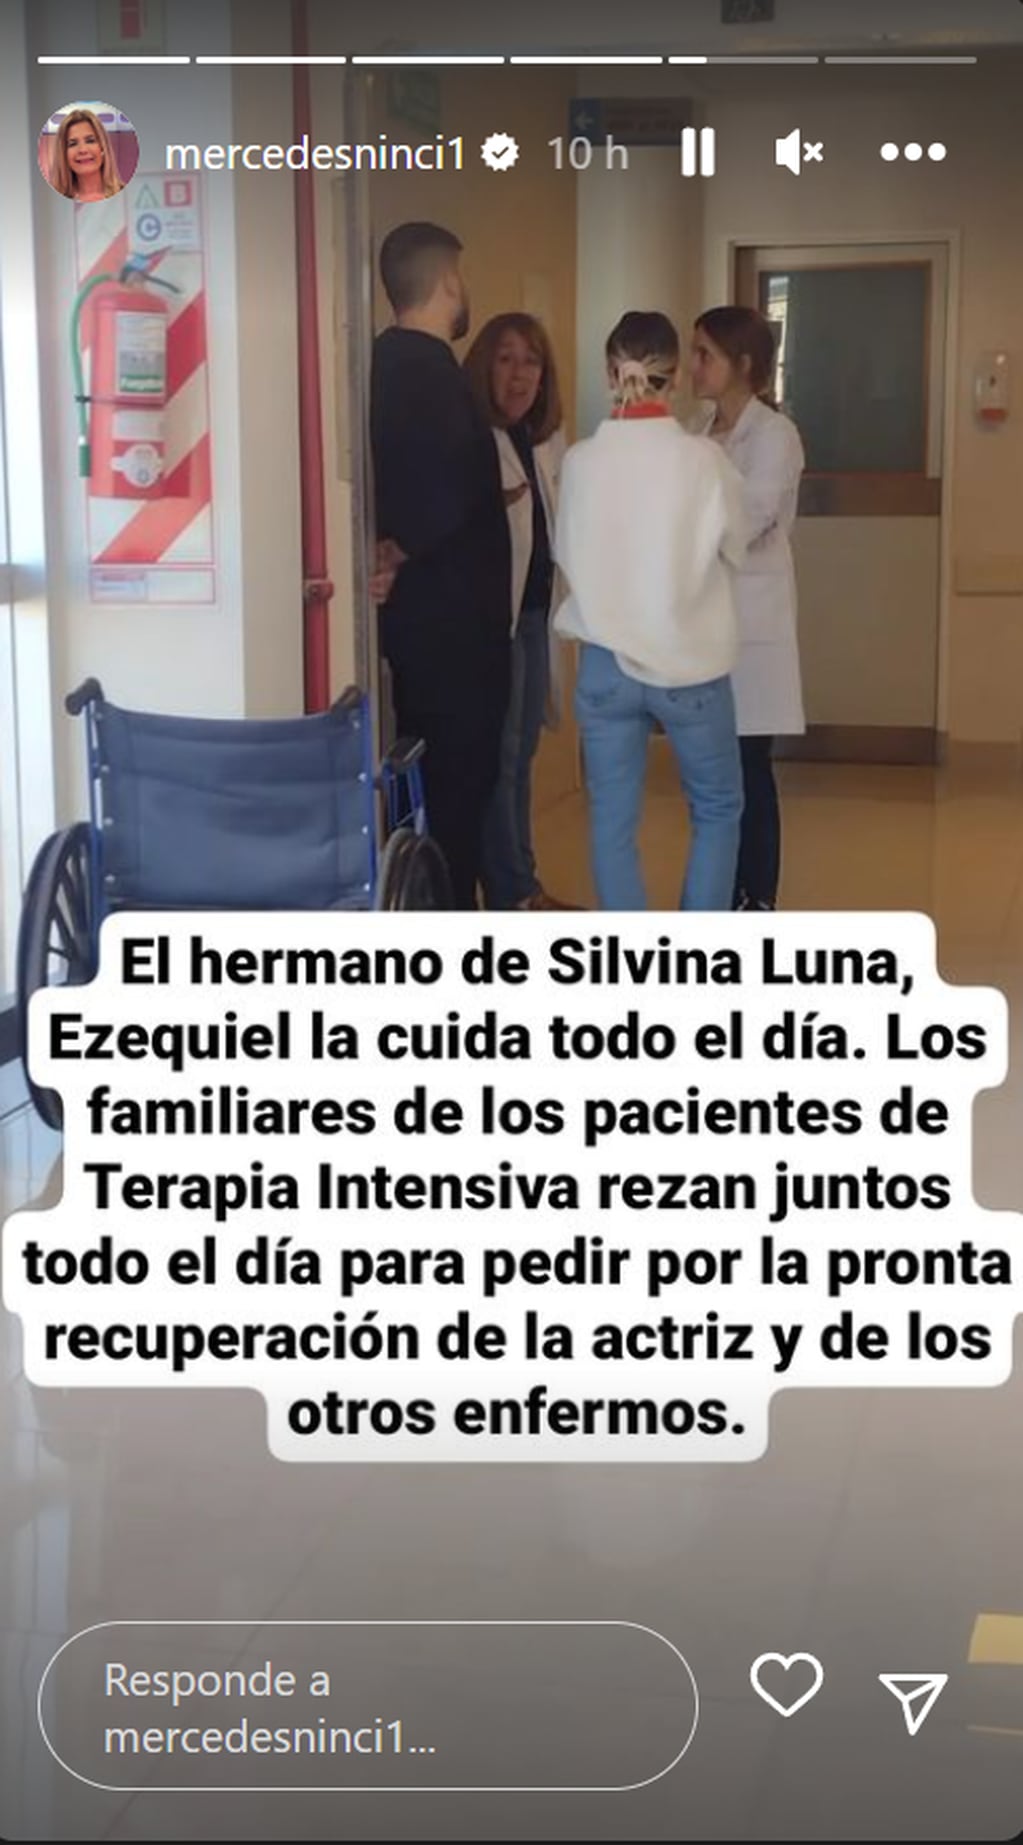 Ezequiel, el hermano de Silvina Luna, firme junto a ella. (Instagram Mercedes Ninci)